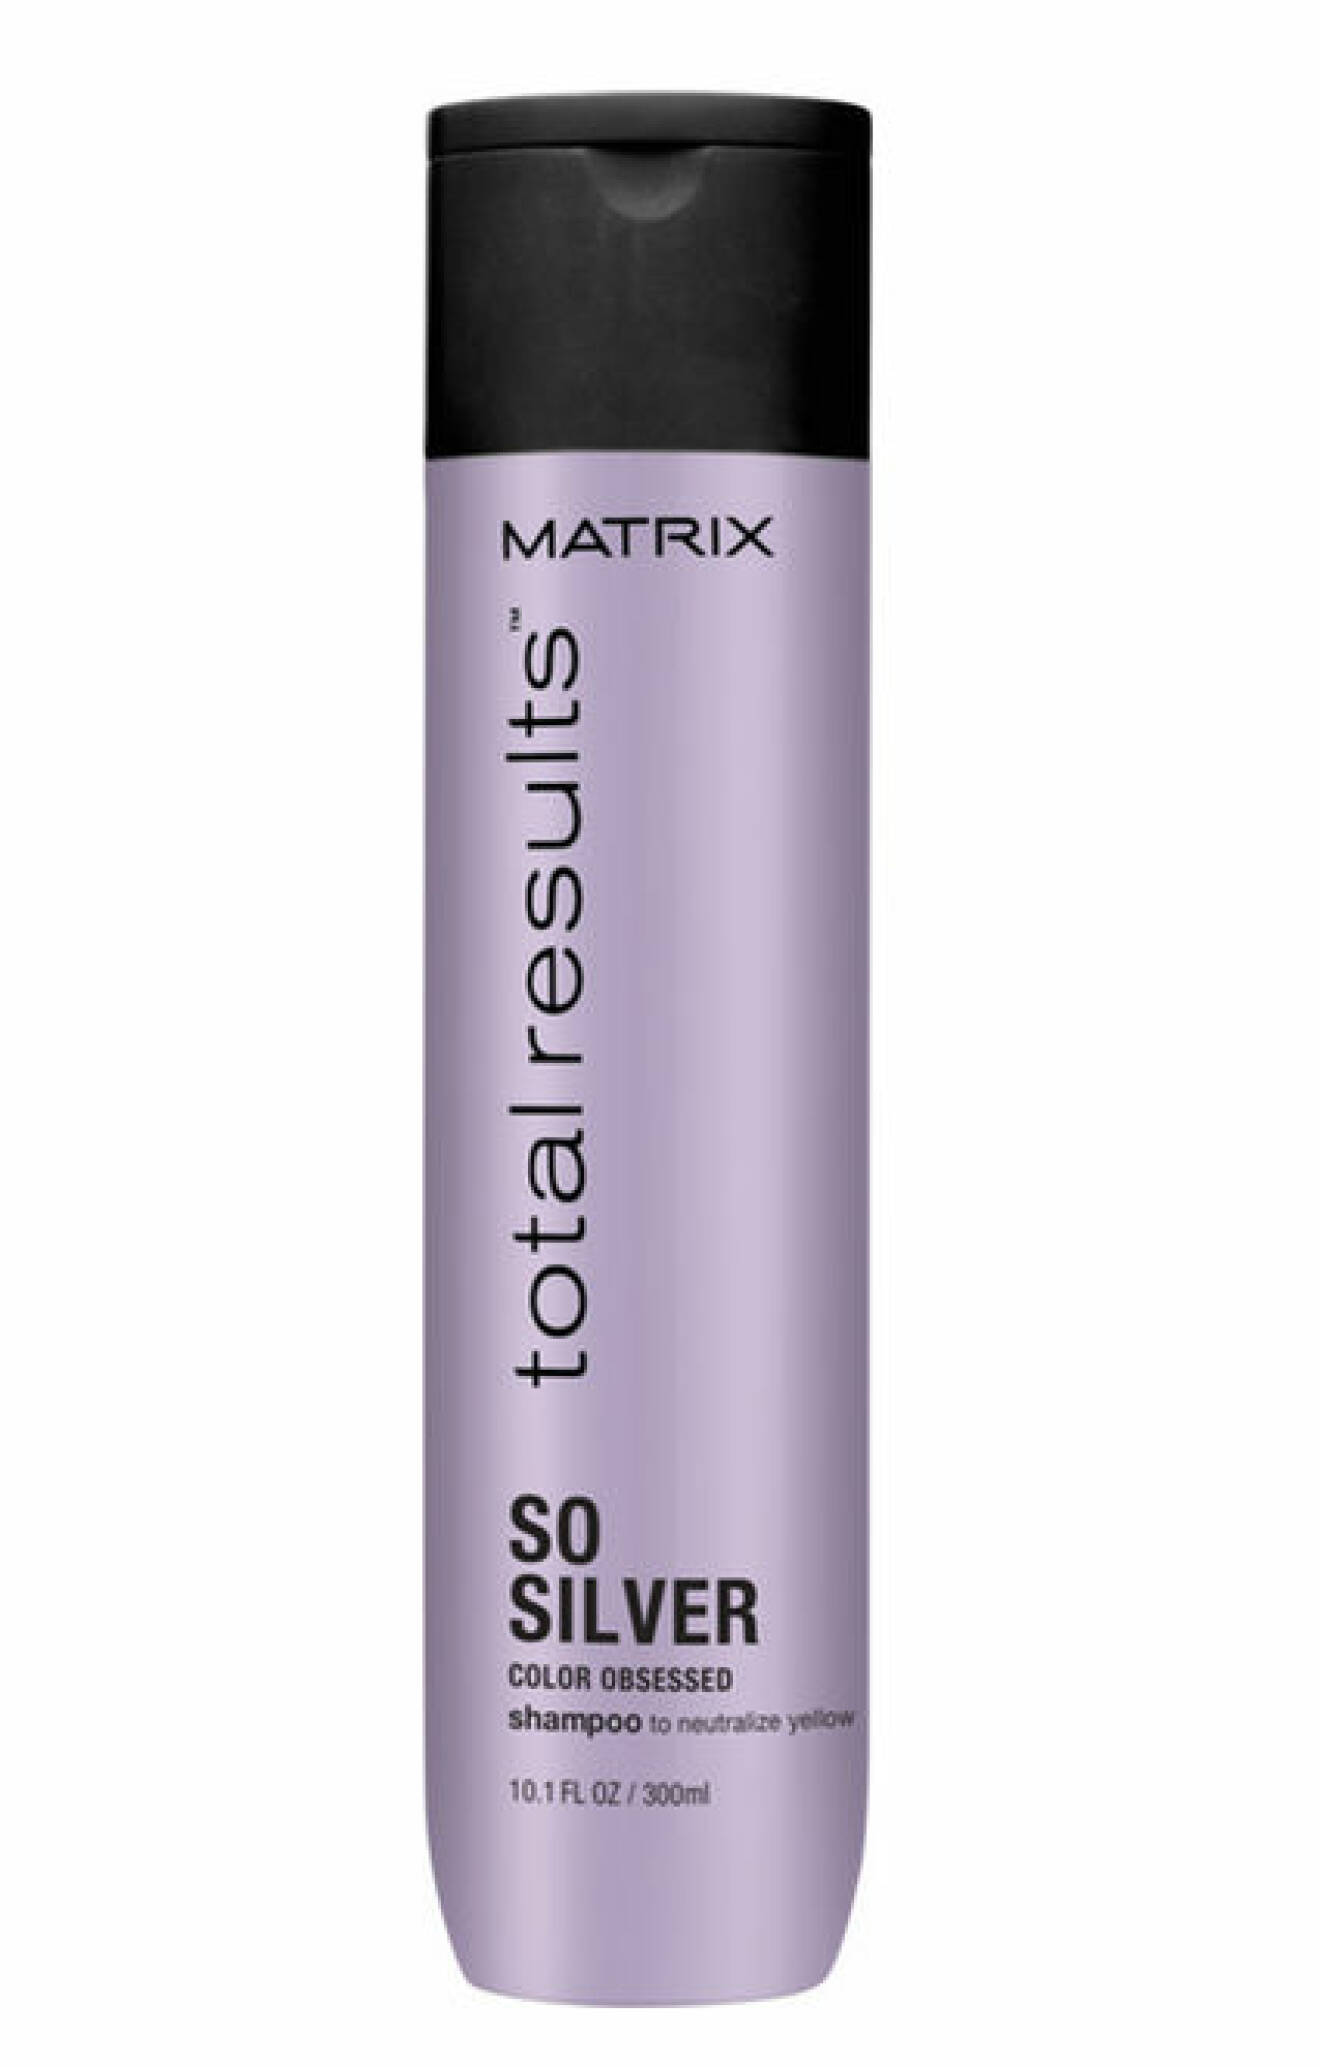 Matrix silverschampo recension